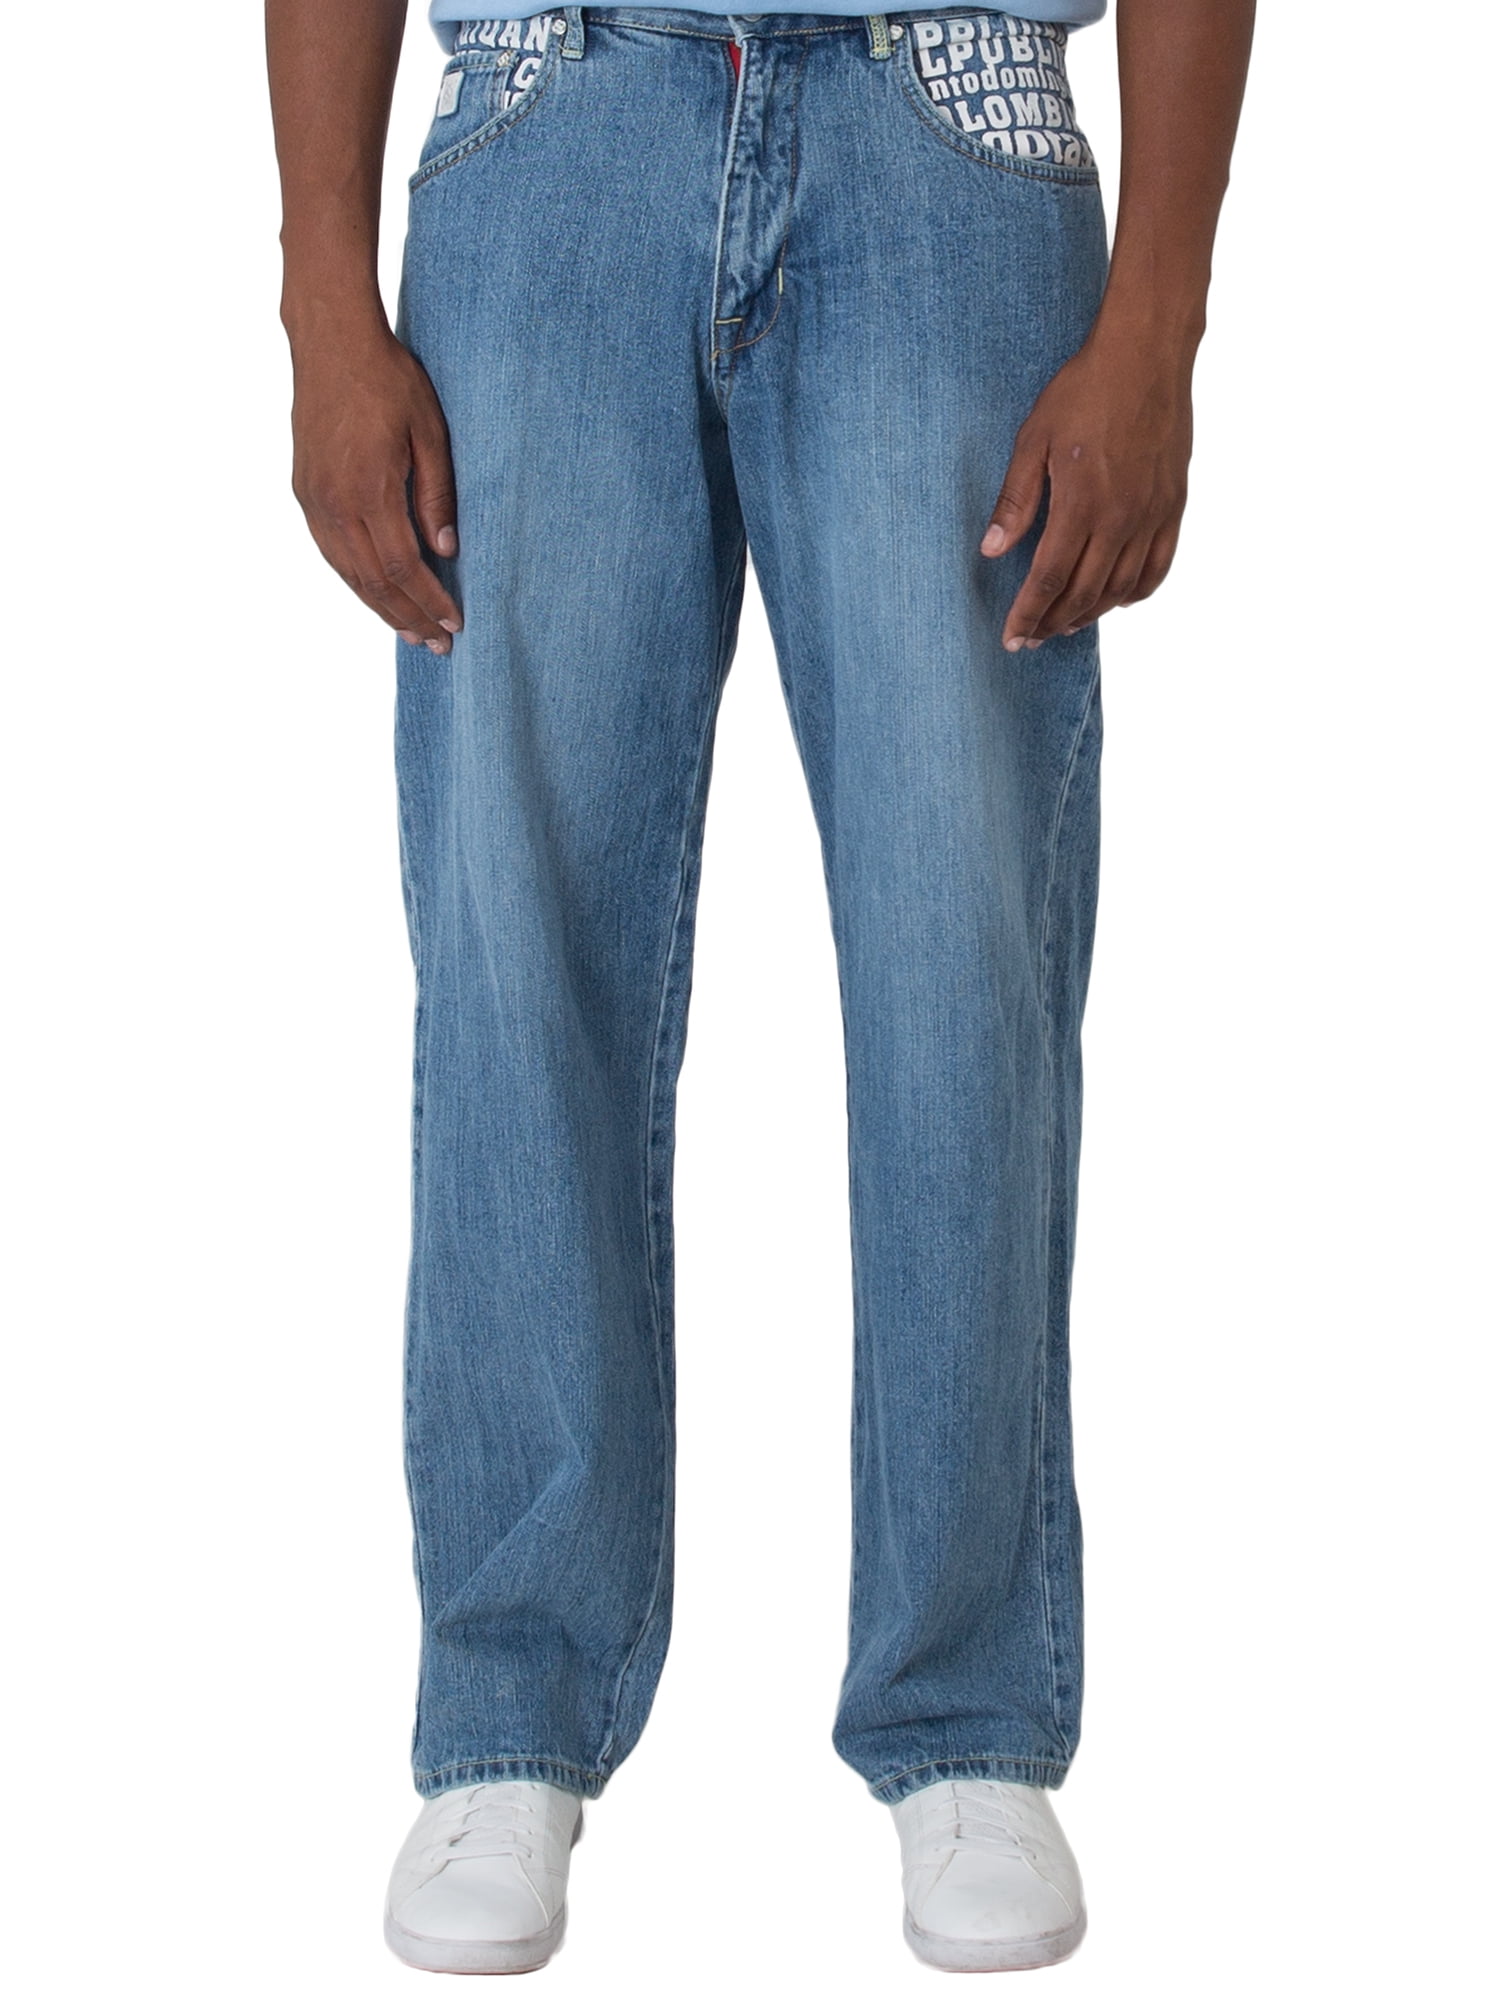 BNWT Men's Loose Fit Jeans Straight Leg Boot cut Sky Blue Jeans all Waist Size 